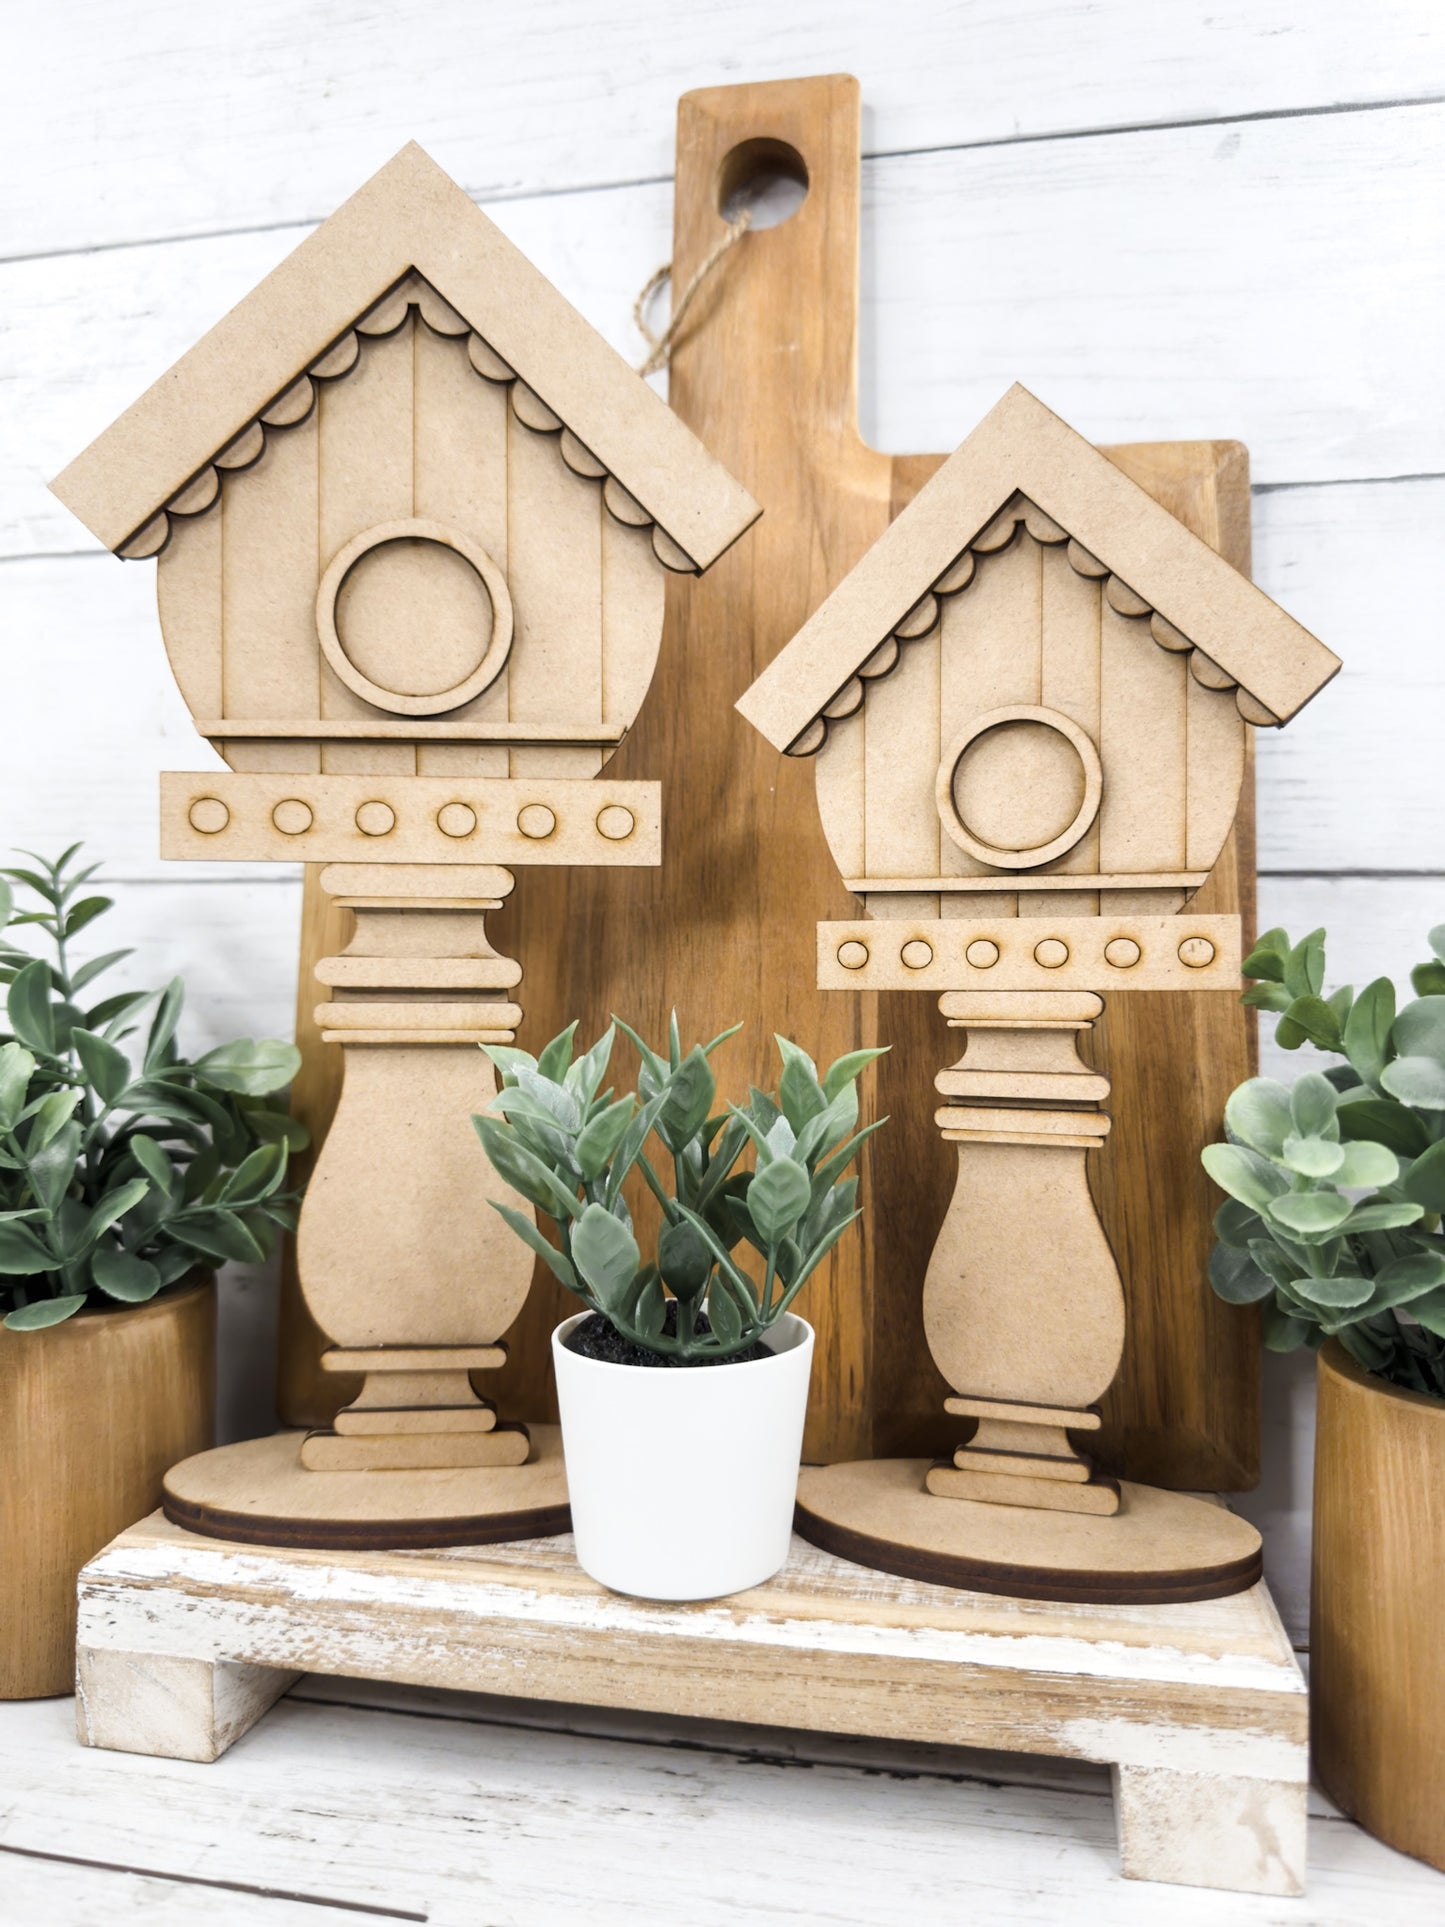 Pair Spindle Base Birdhouses DIY Kit